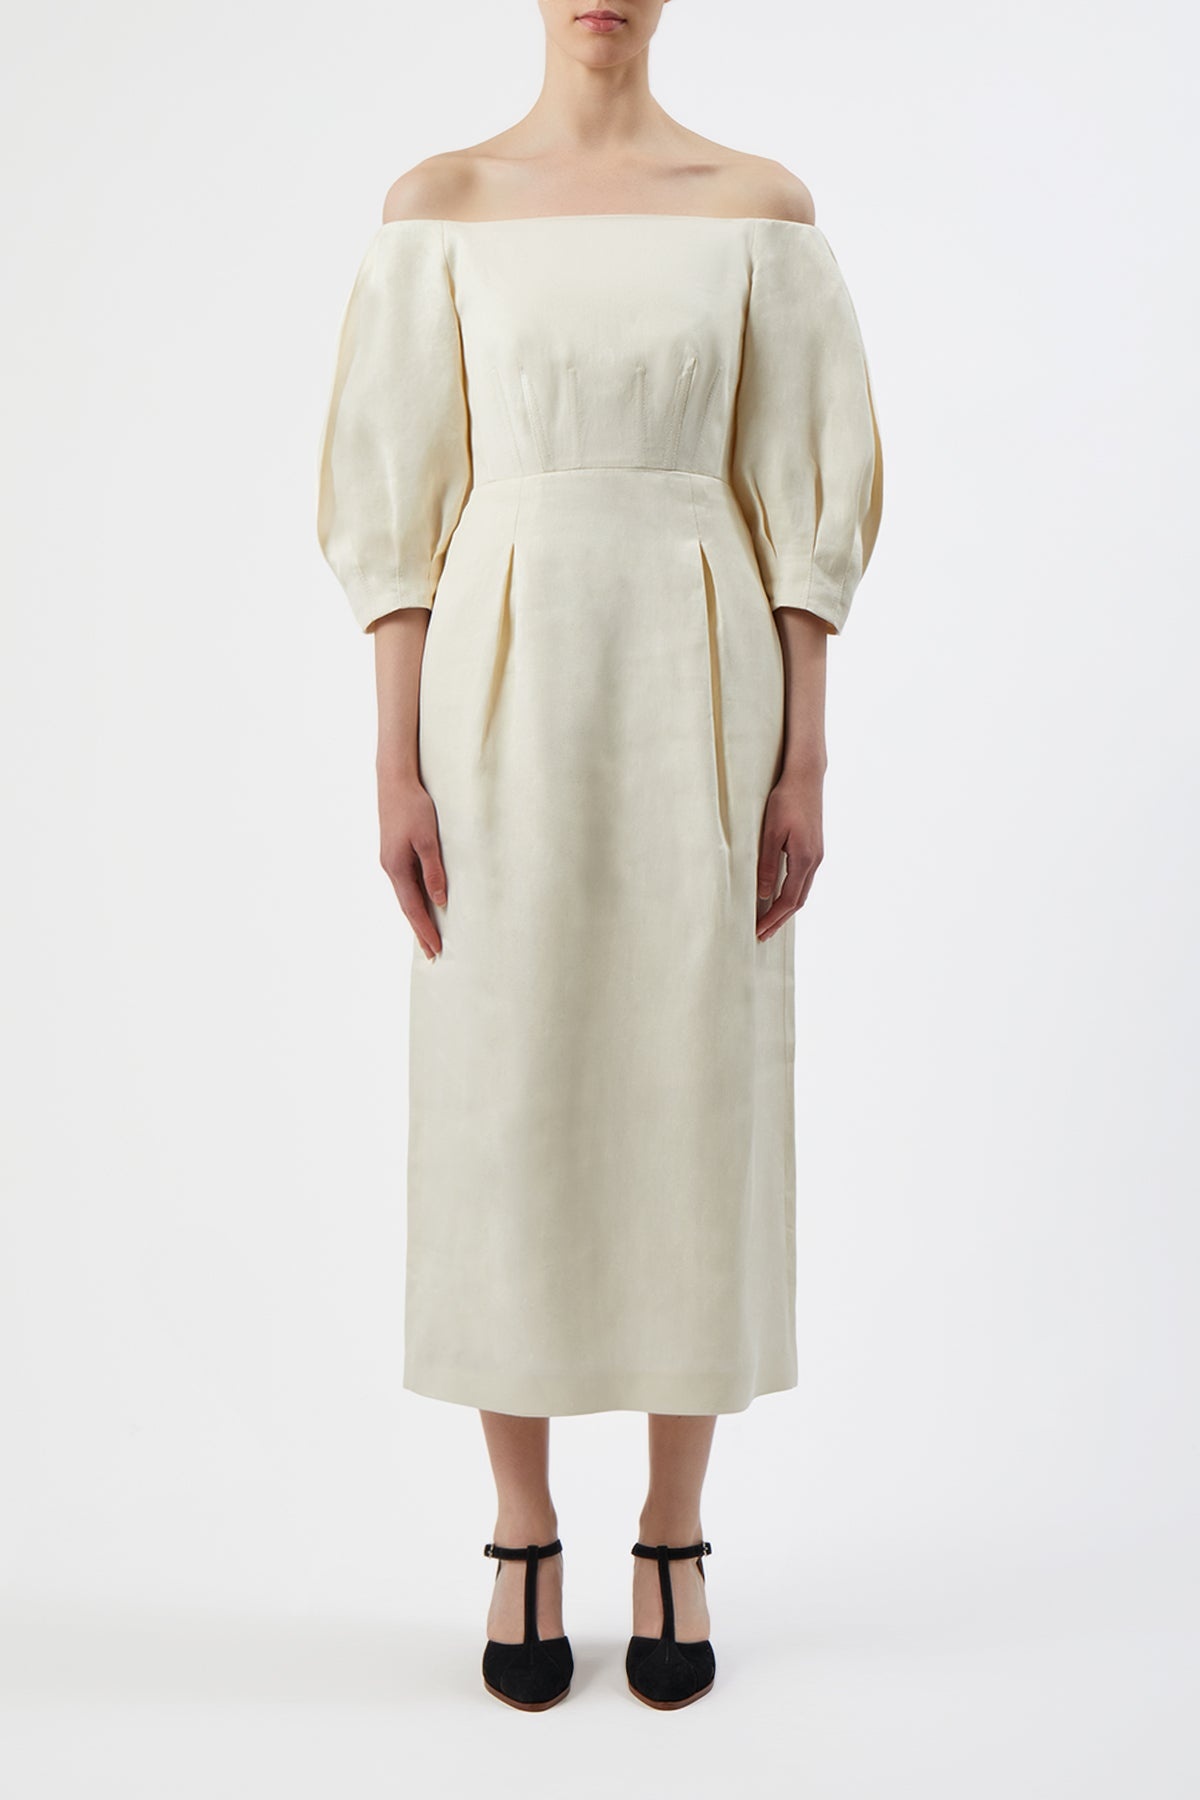 Majano Dress in Hemp Cotton - 2